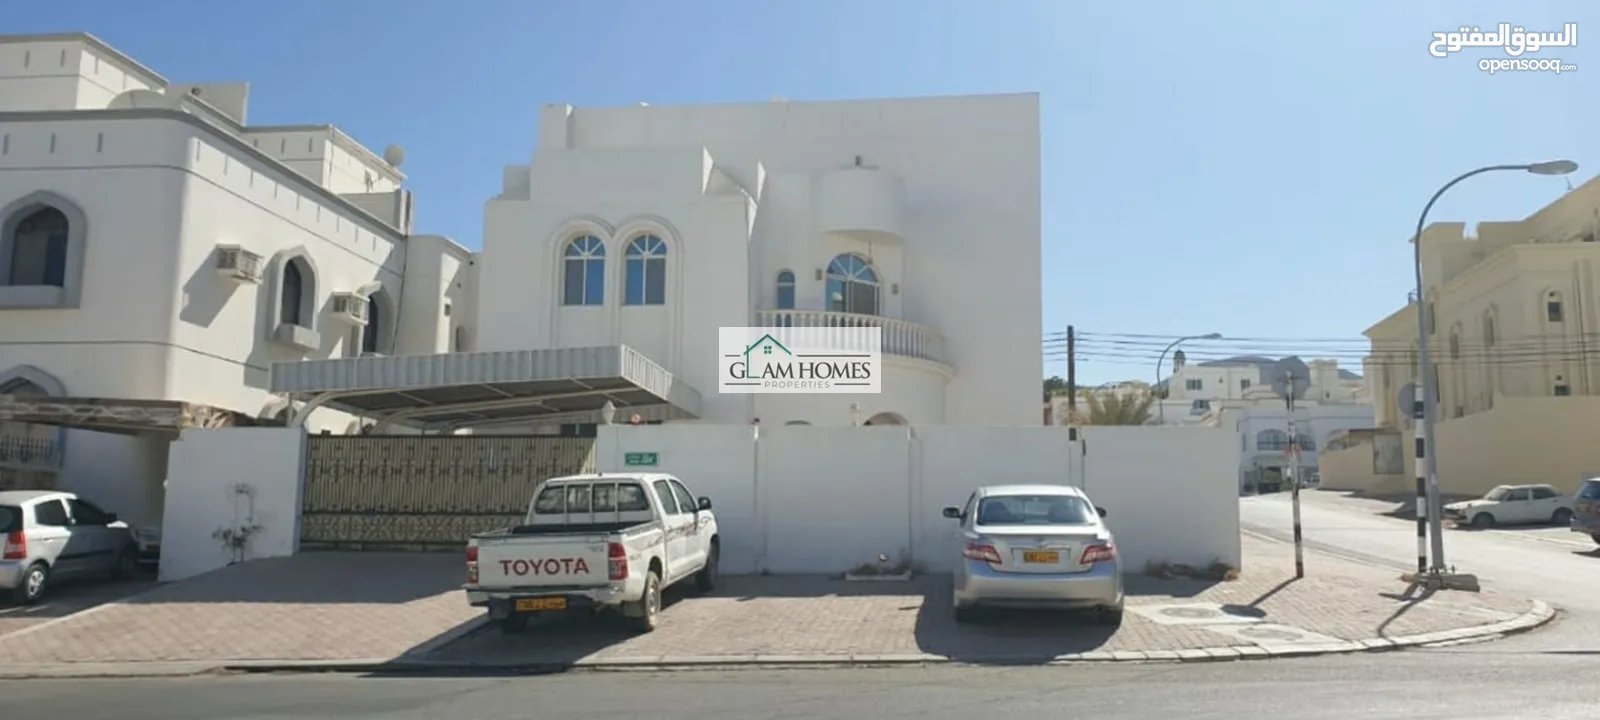 Glamorous 7 BR villa for sale in Al Khuwair 33 Ref: 561H